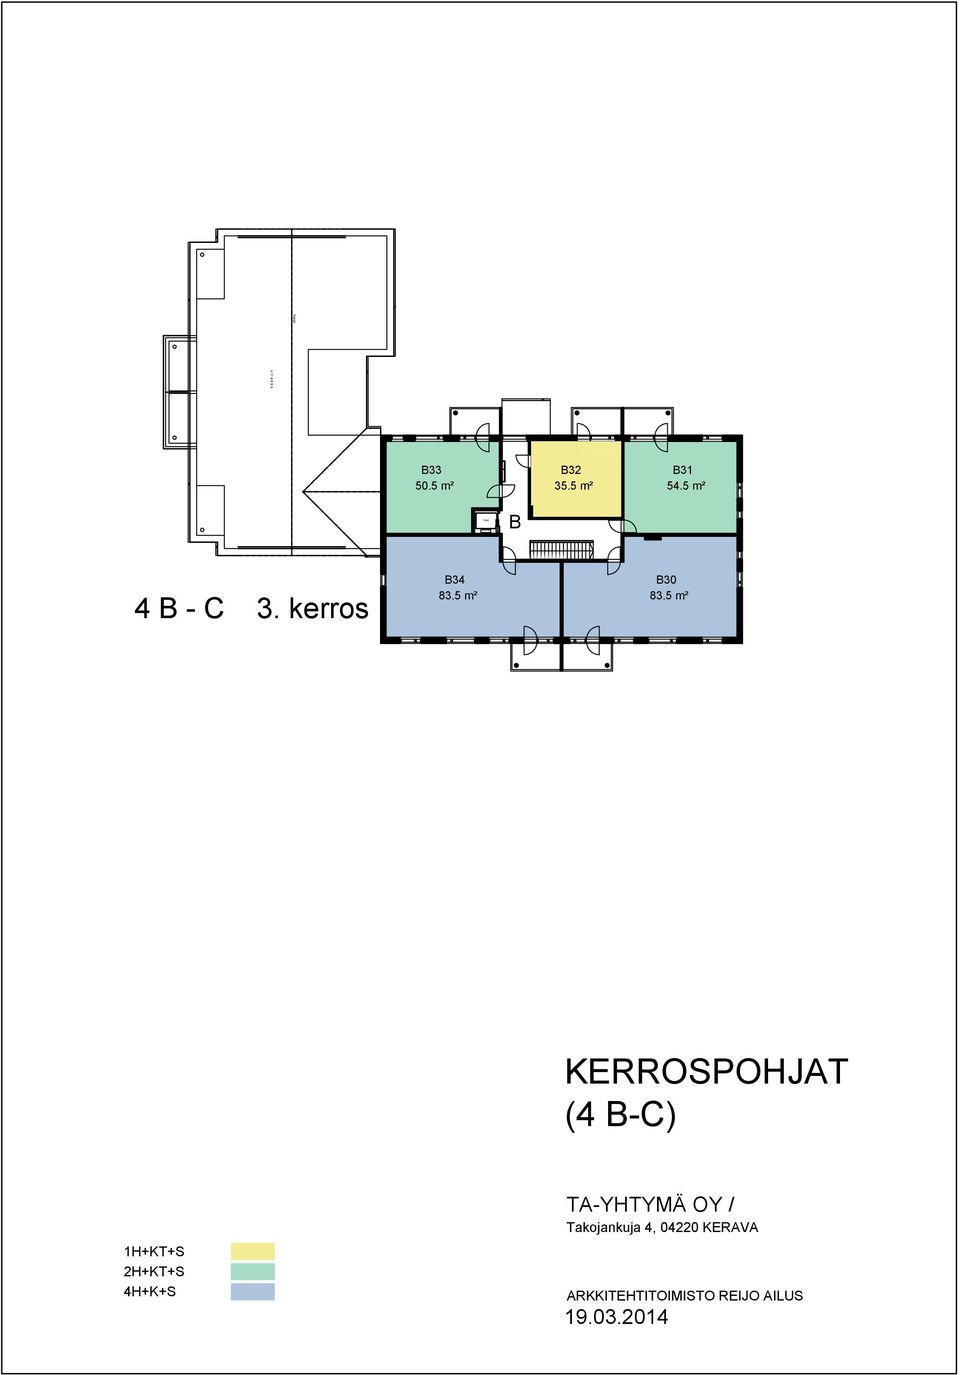 kerros B34 83.5 m² B30 83.